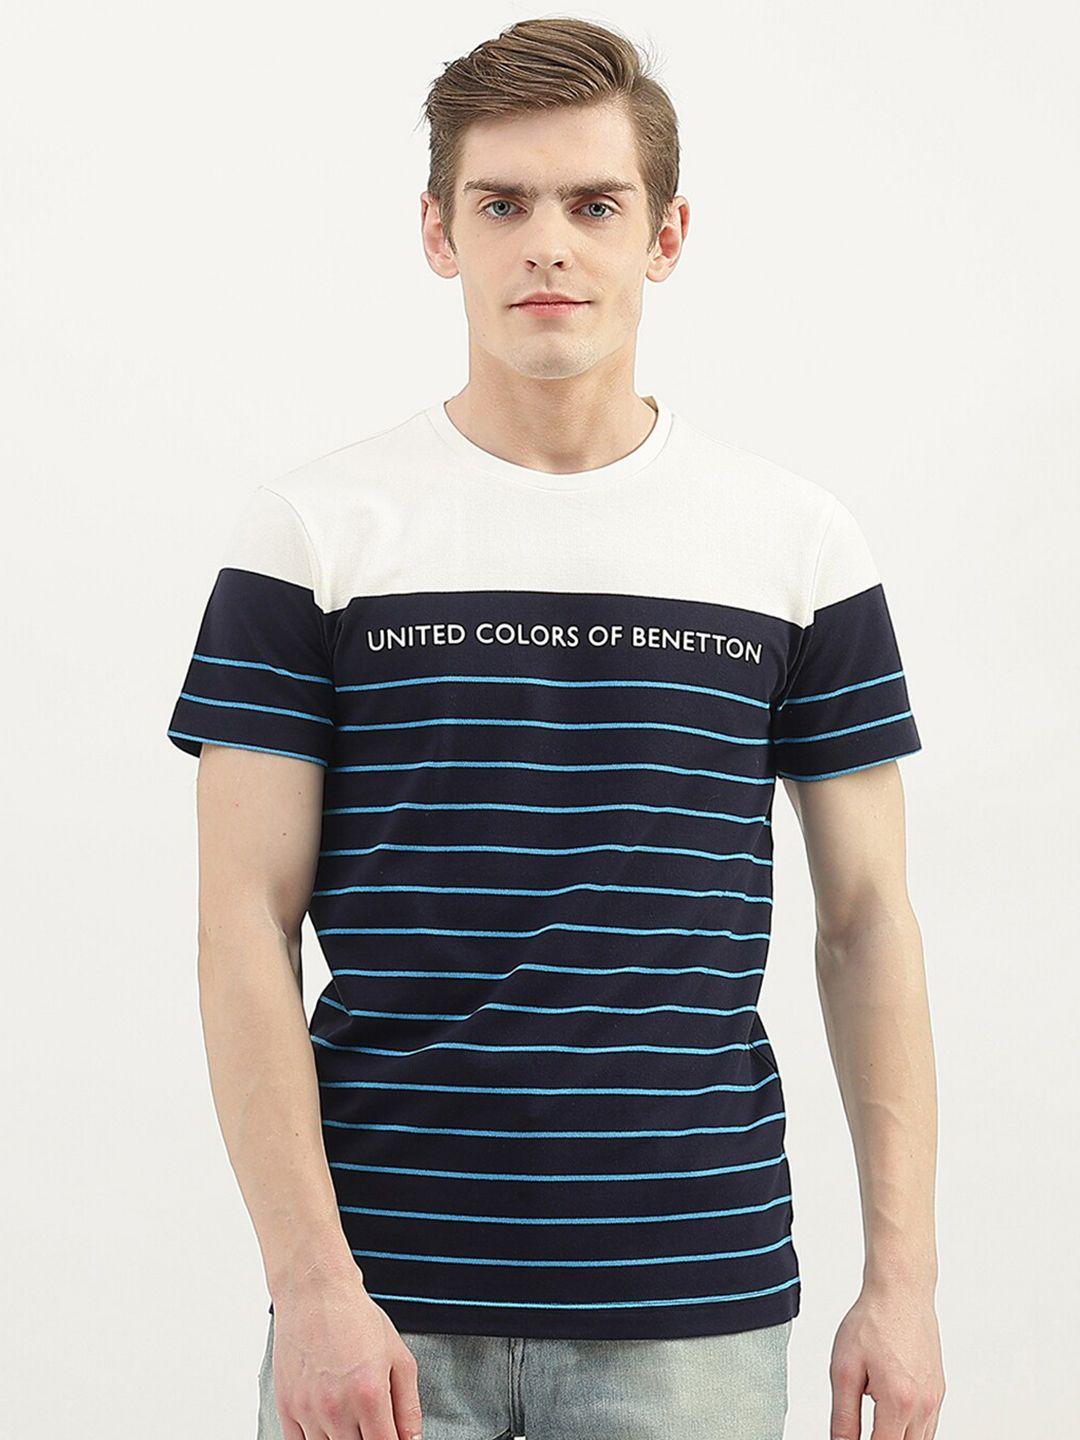 united-colors-of-benetton-men-striped-round-neck-cotton-t-shirt